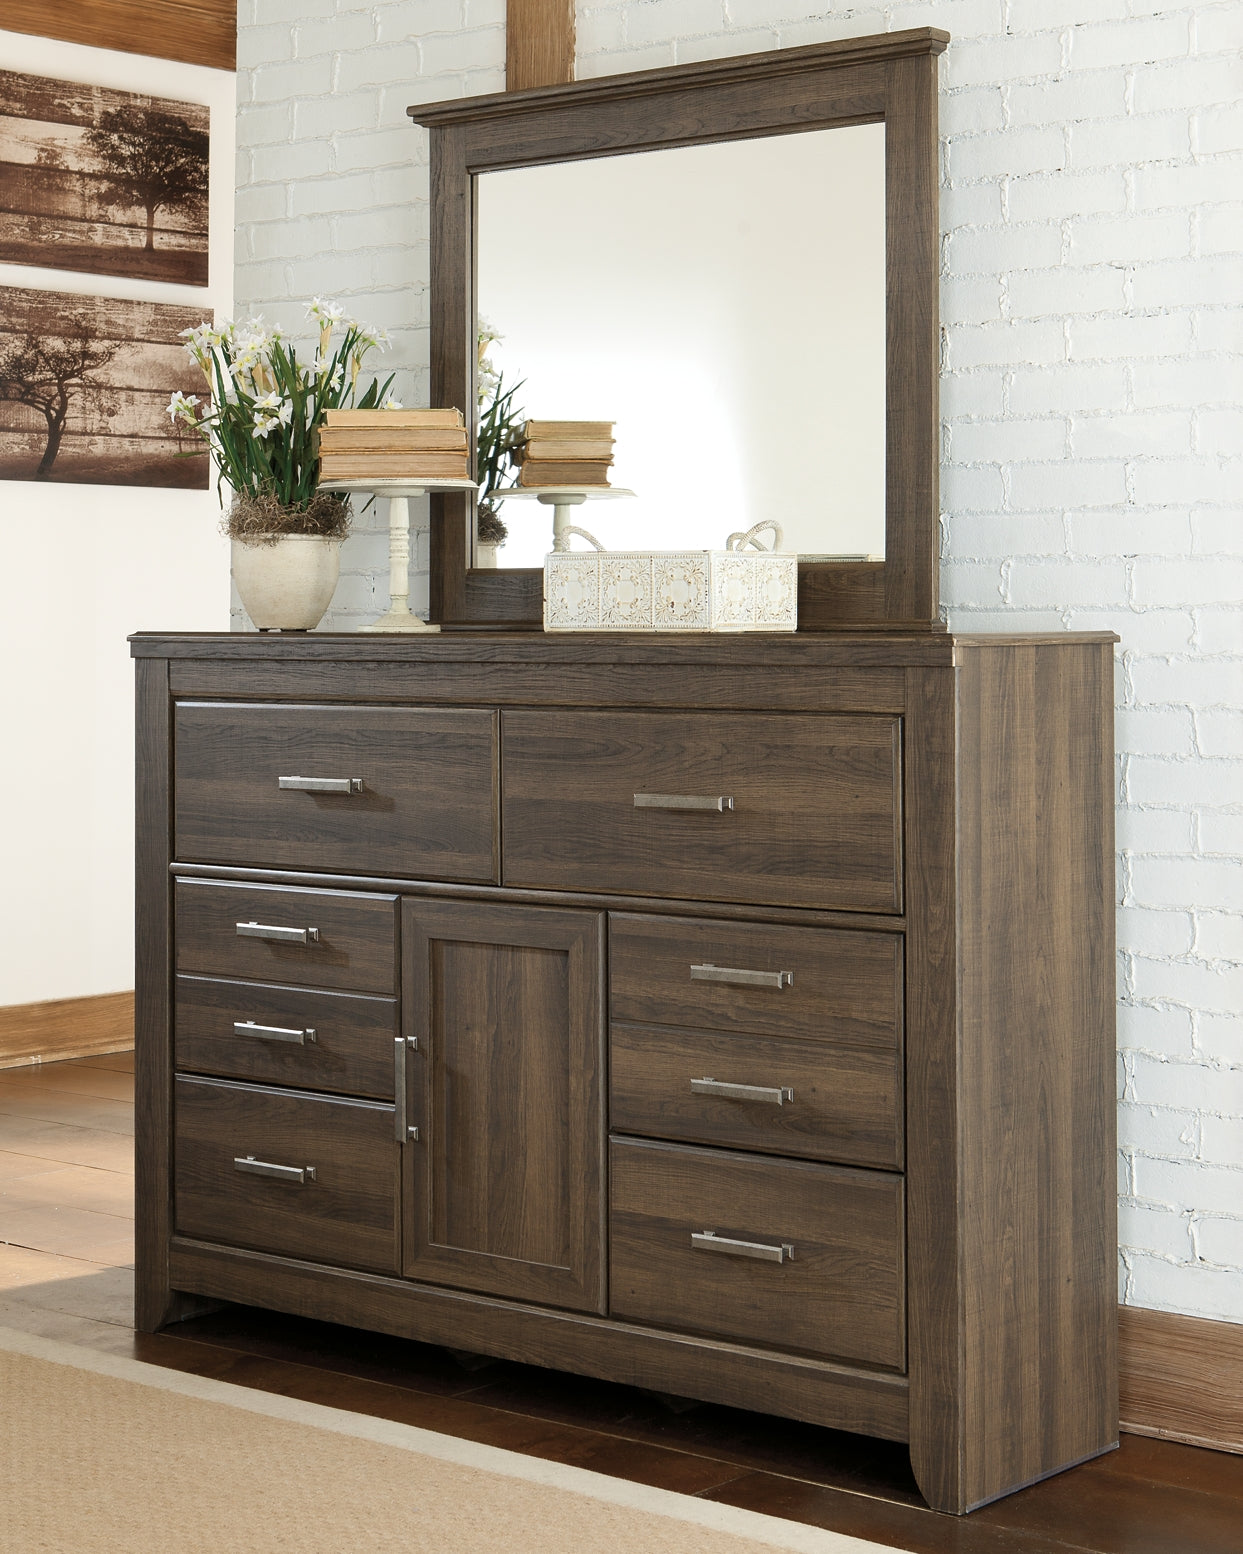 Juararo King Panel Bed with Mirrored Dresser JB's Furniture  Home Furniture, Home Decor, Furniture Store